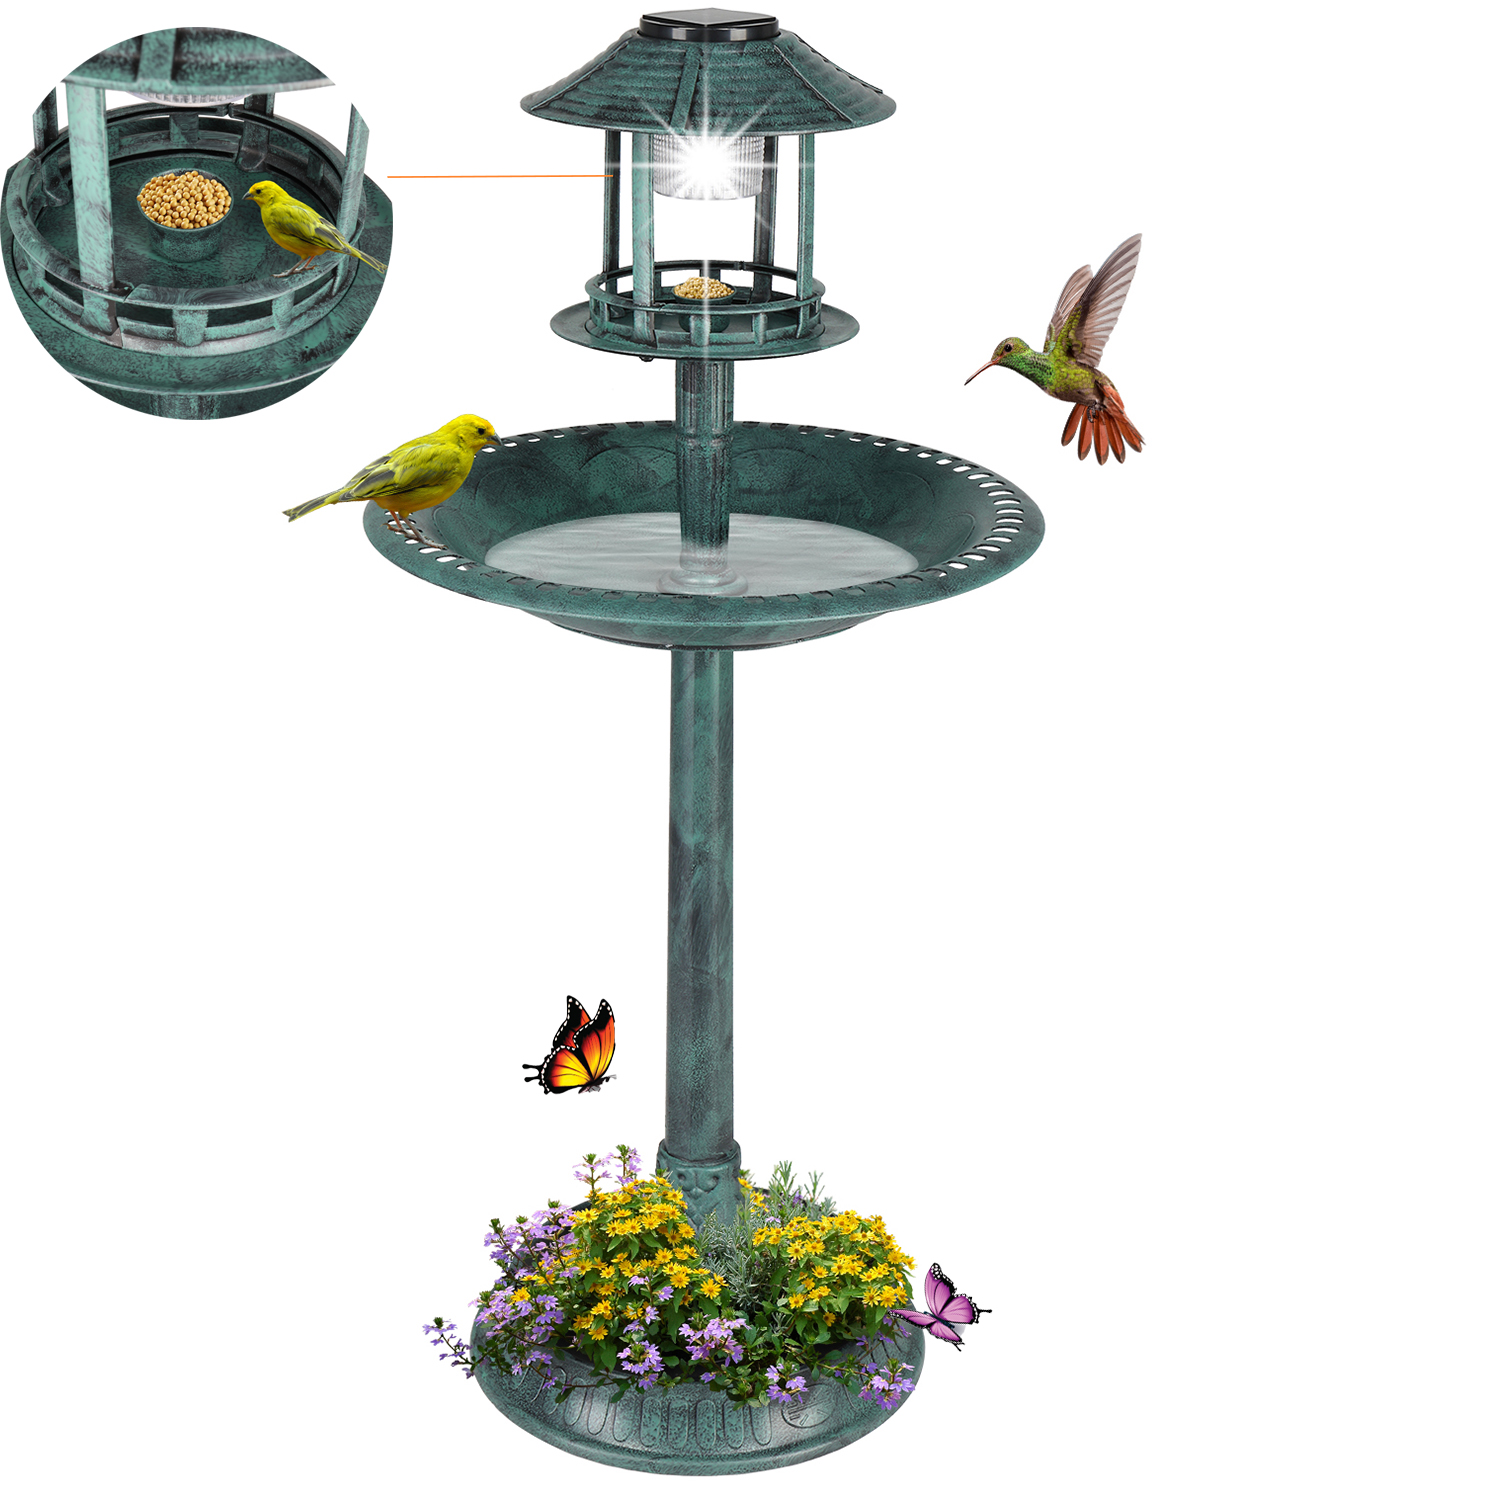 Seizeen Outdoor Bird Bath, Green Garden Birdbaths & Bird Feeder Comb with Solar Light, Base Planter, 3 Tiers Round Bird Bath Garden Decor for Outside Lawn Yard - image 1 of 10